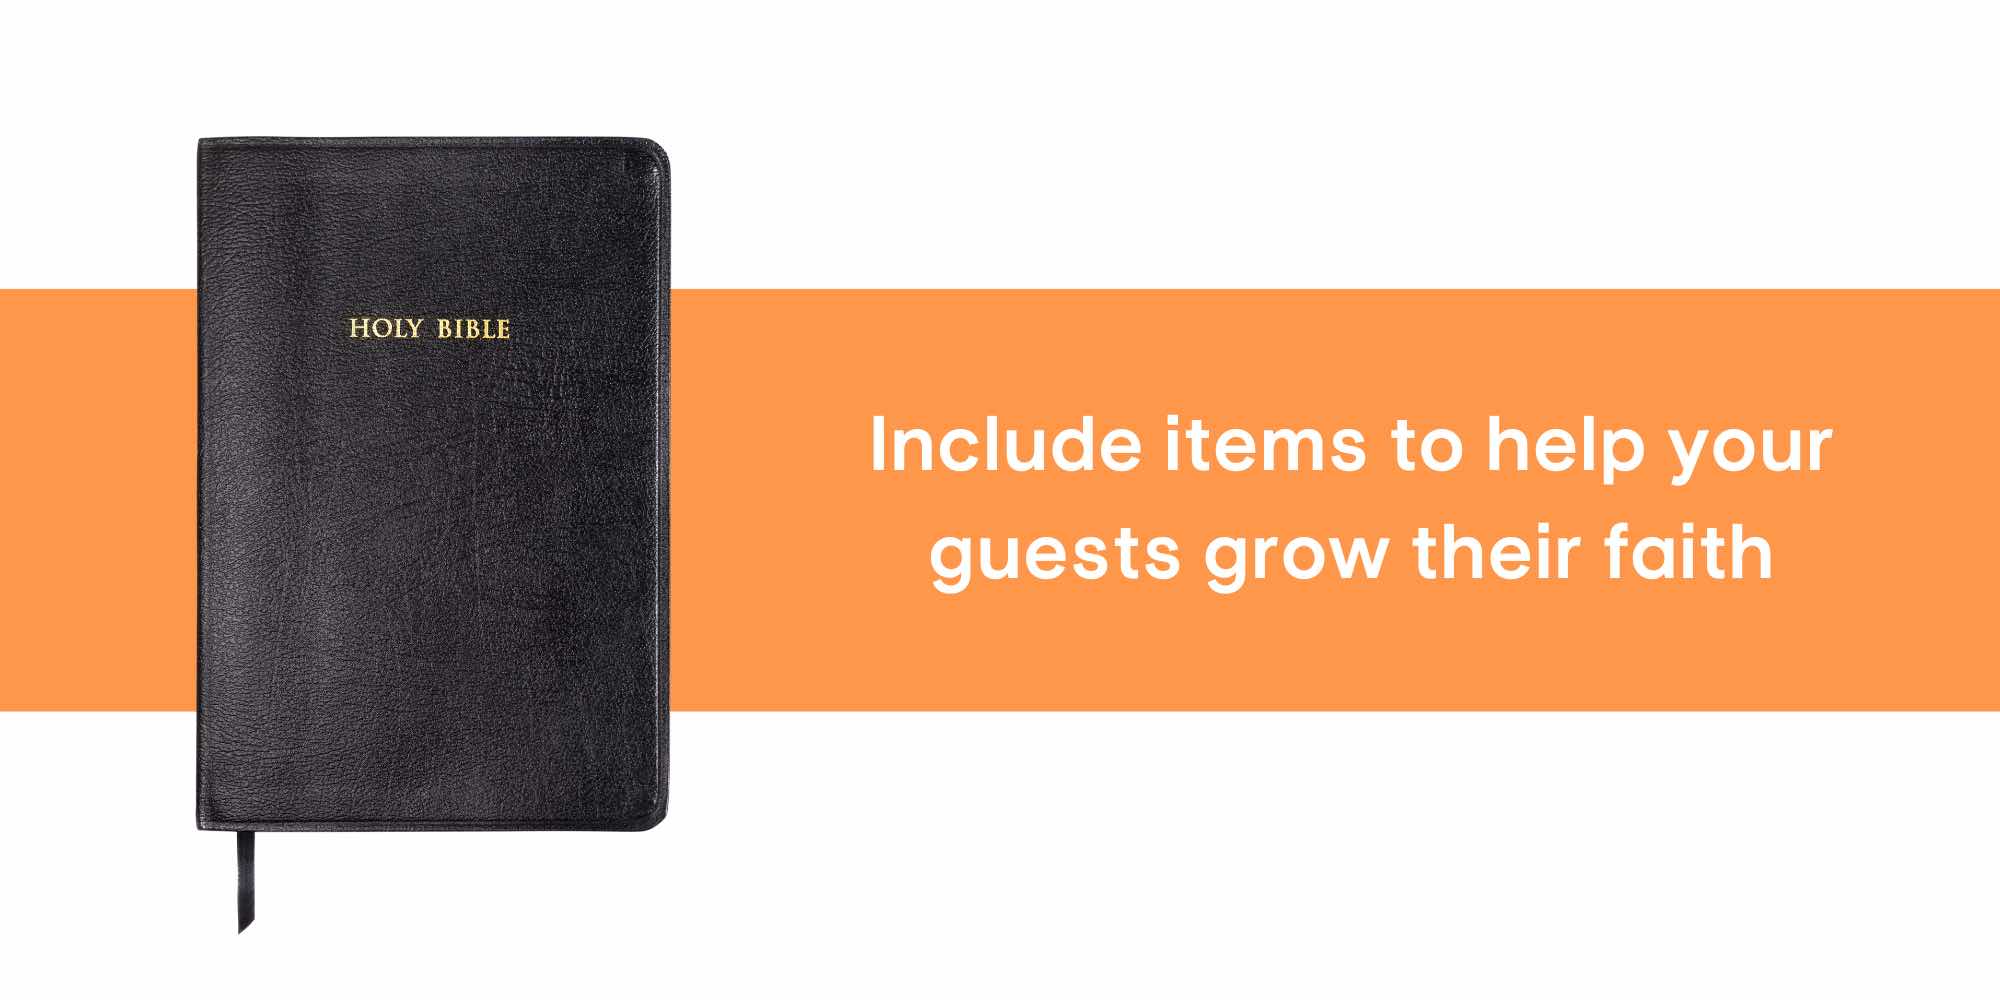 Add items to grow your guest's faith